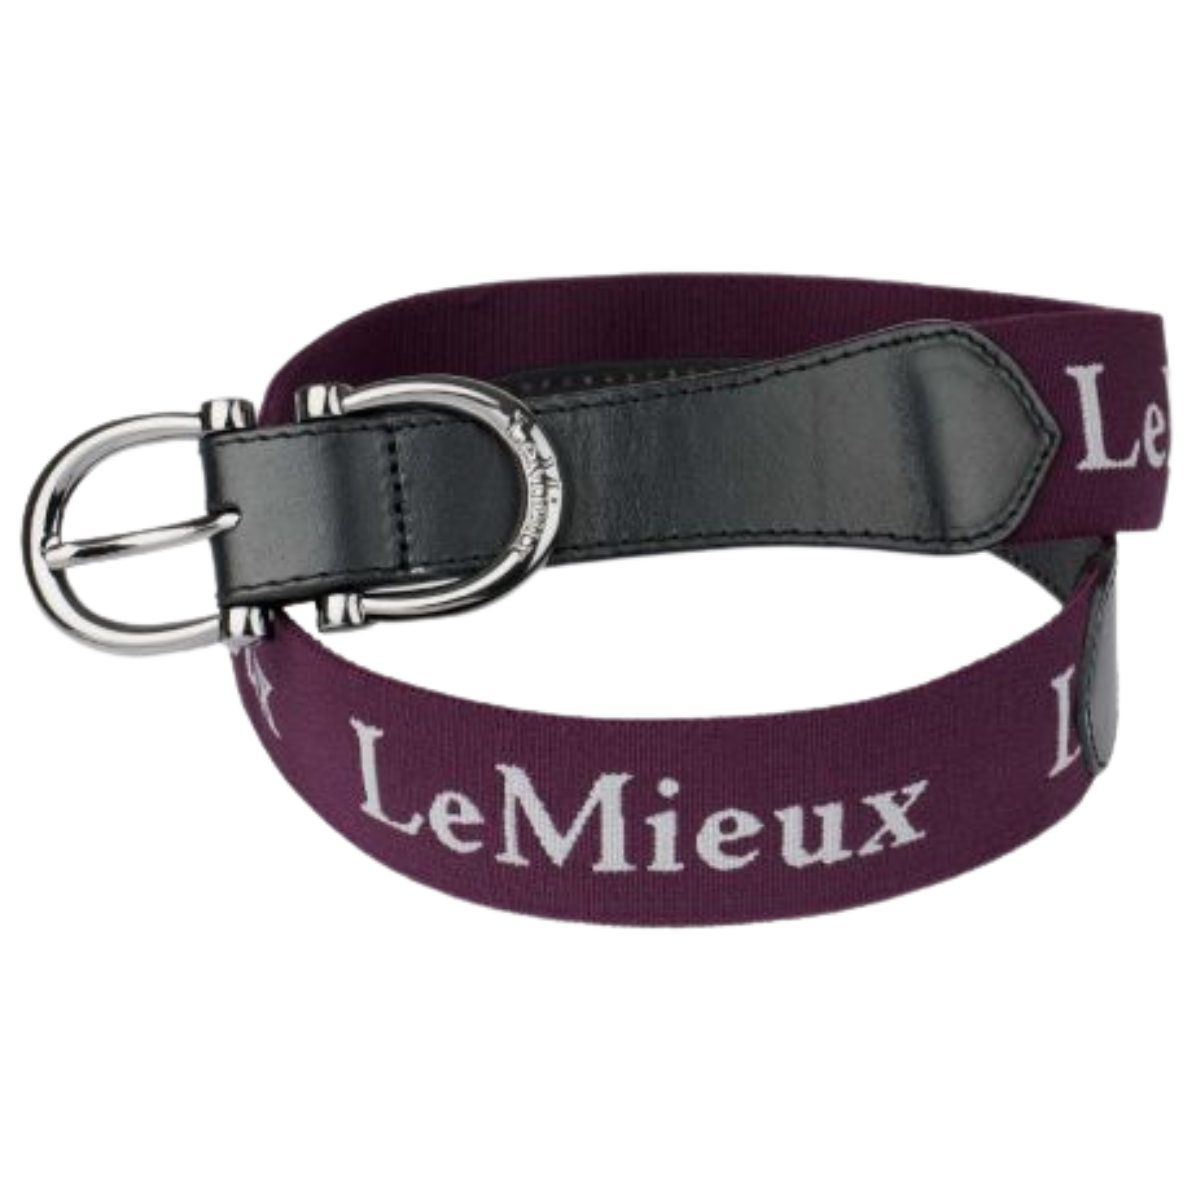 LeMieux Elasticated Belt in Fig